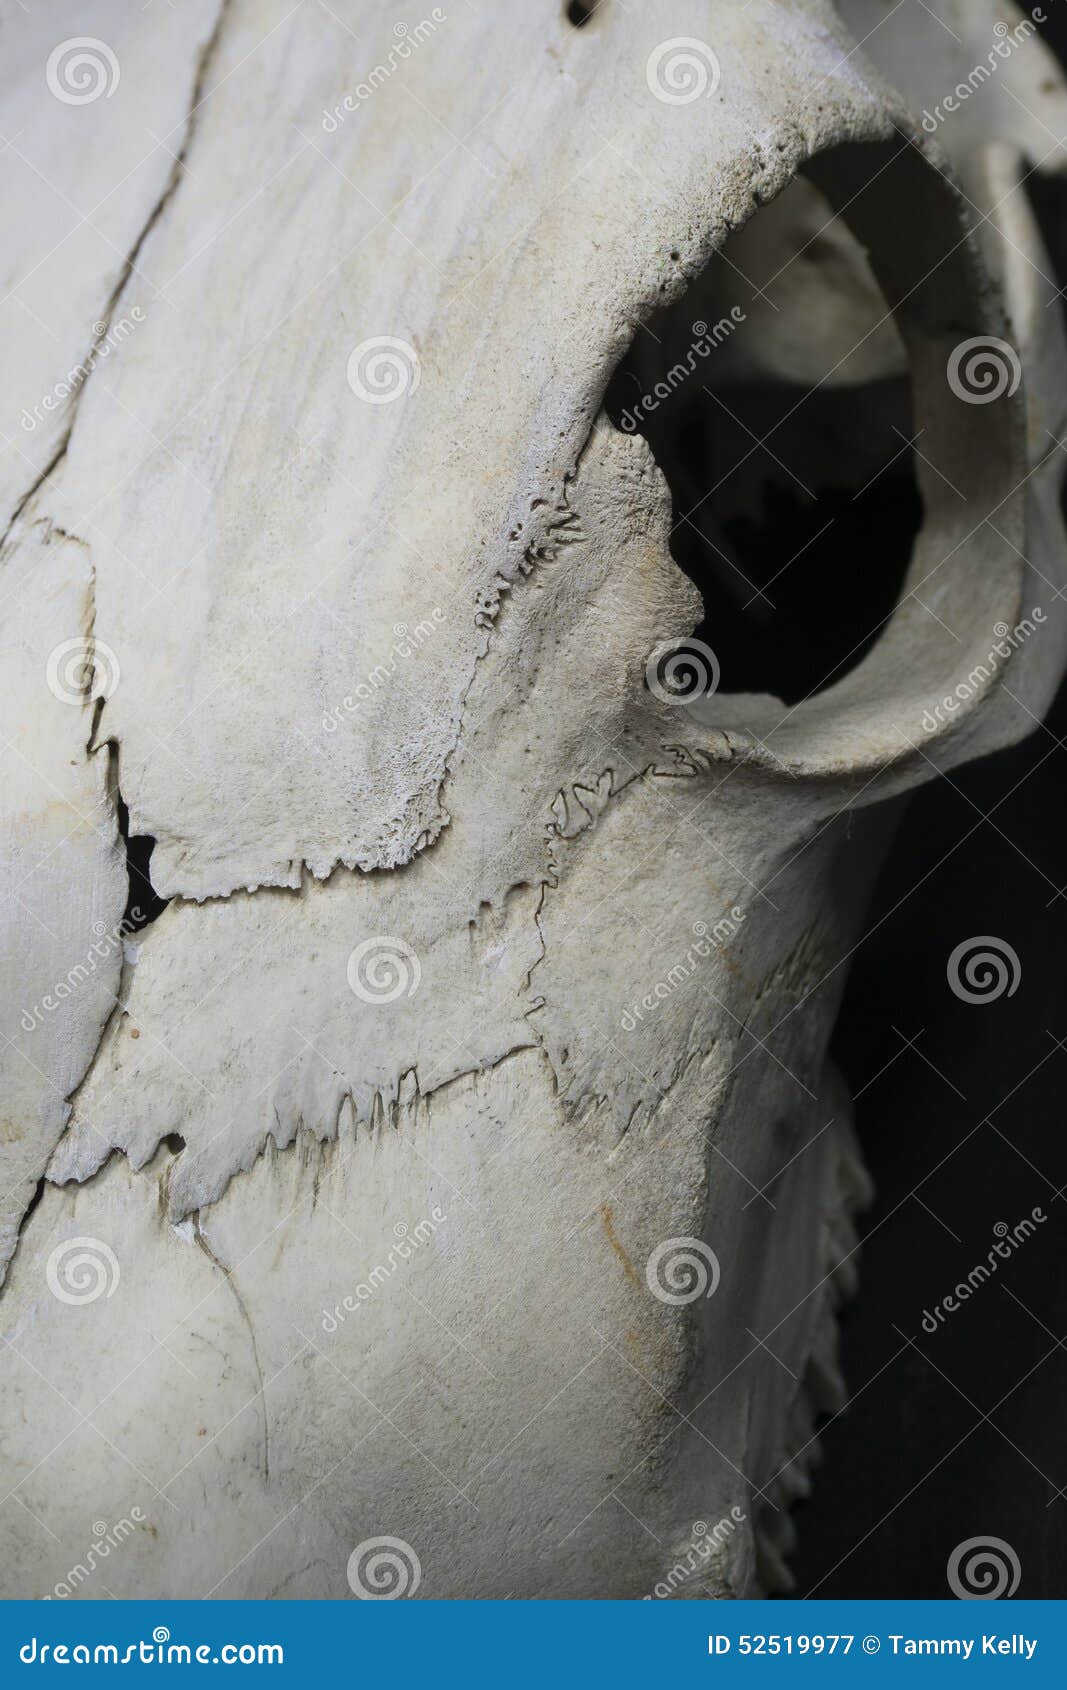 Animal Skull Close Up stock image. Image of texture, white - 52519977